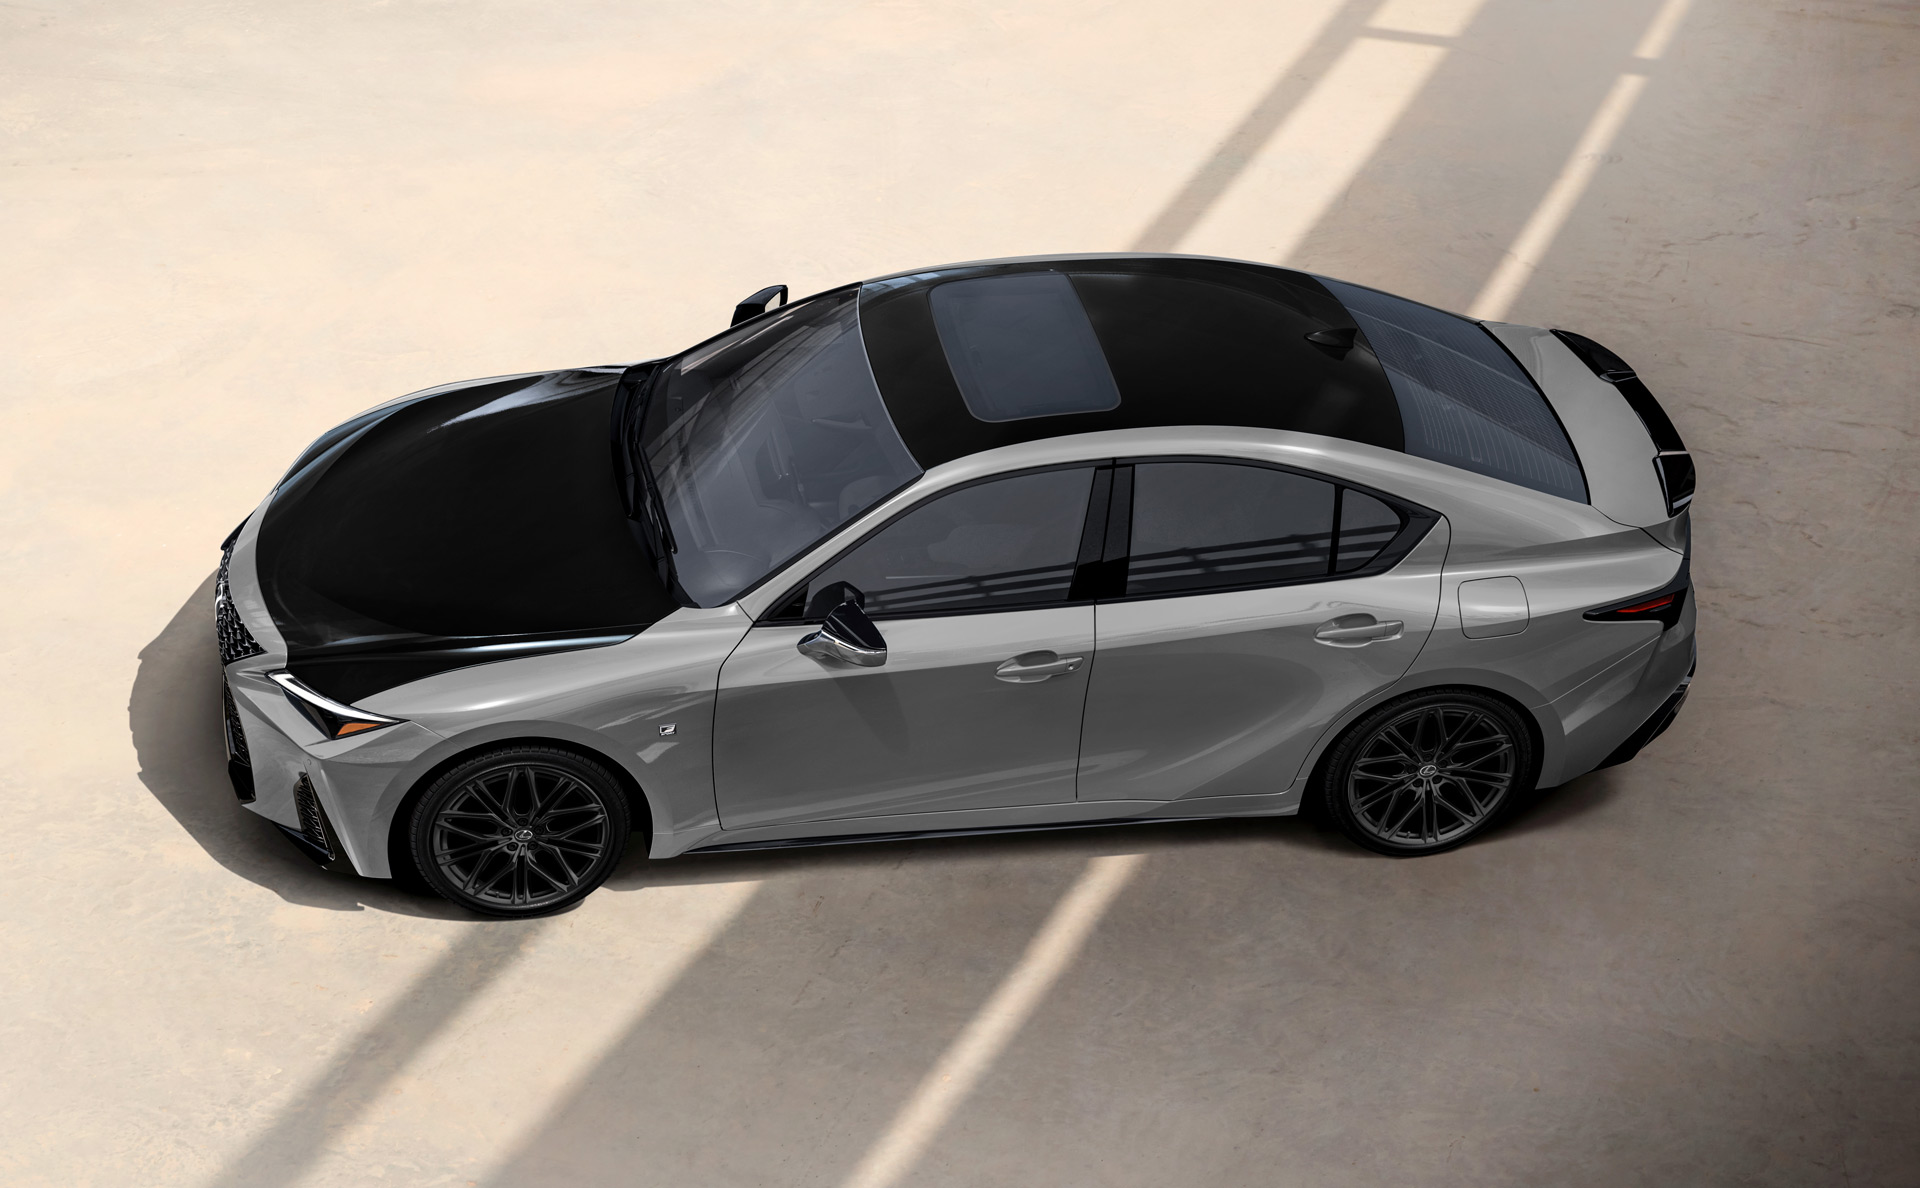 2023 Lexus IS, Lightyear 0, Grand Wagoneer EV conversion: Car News Headlines Auto Recent